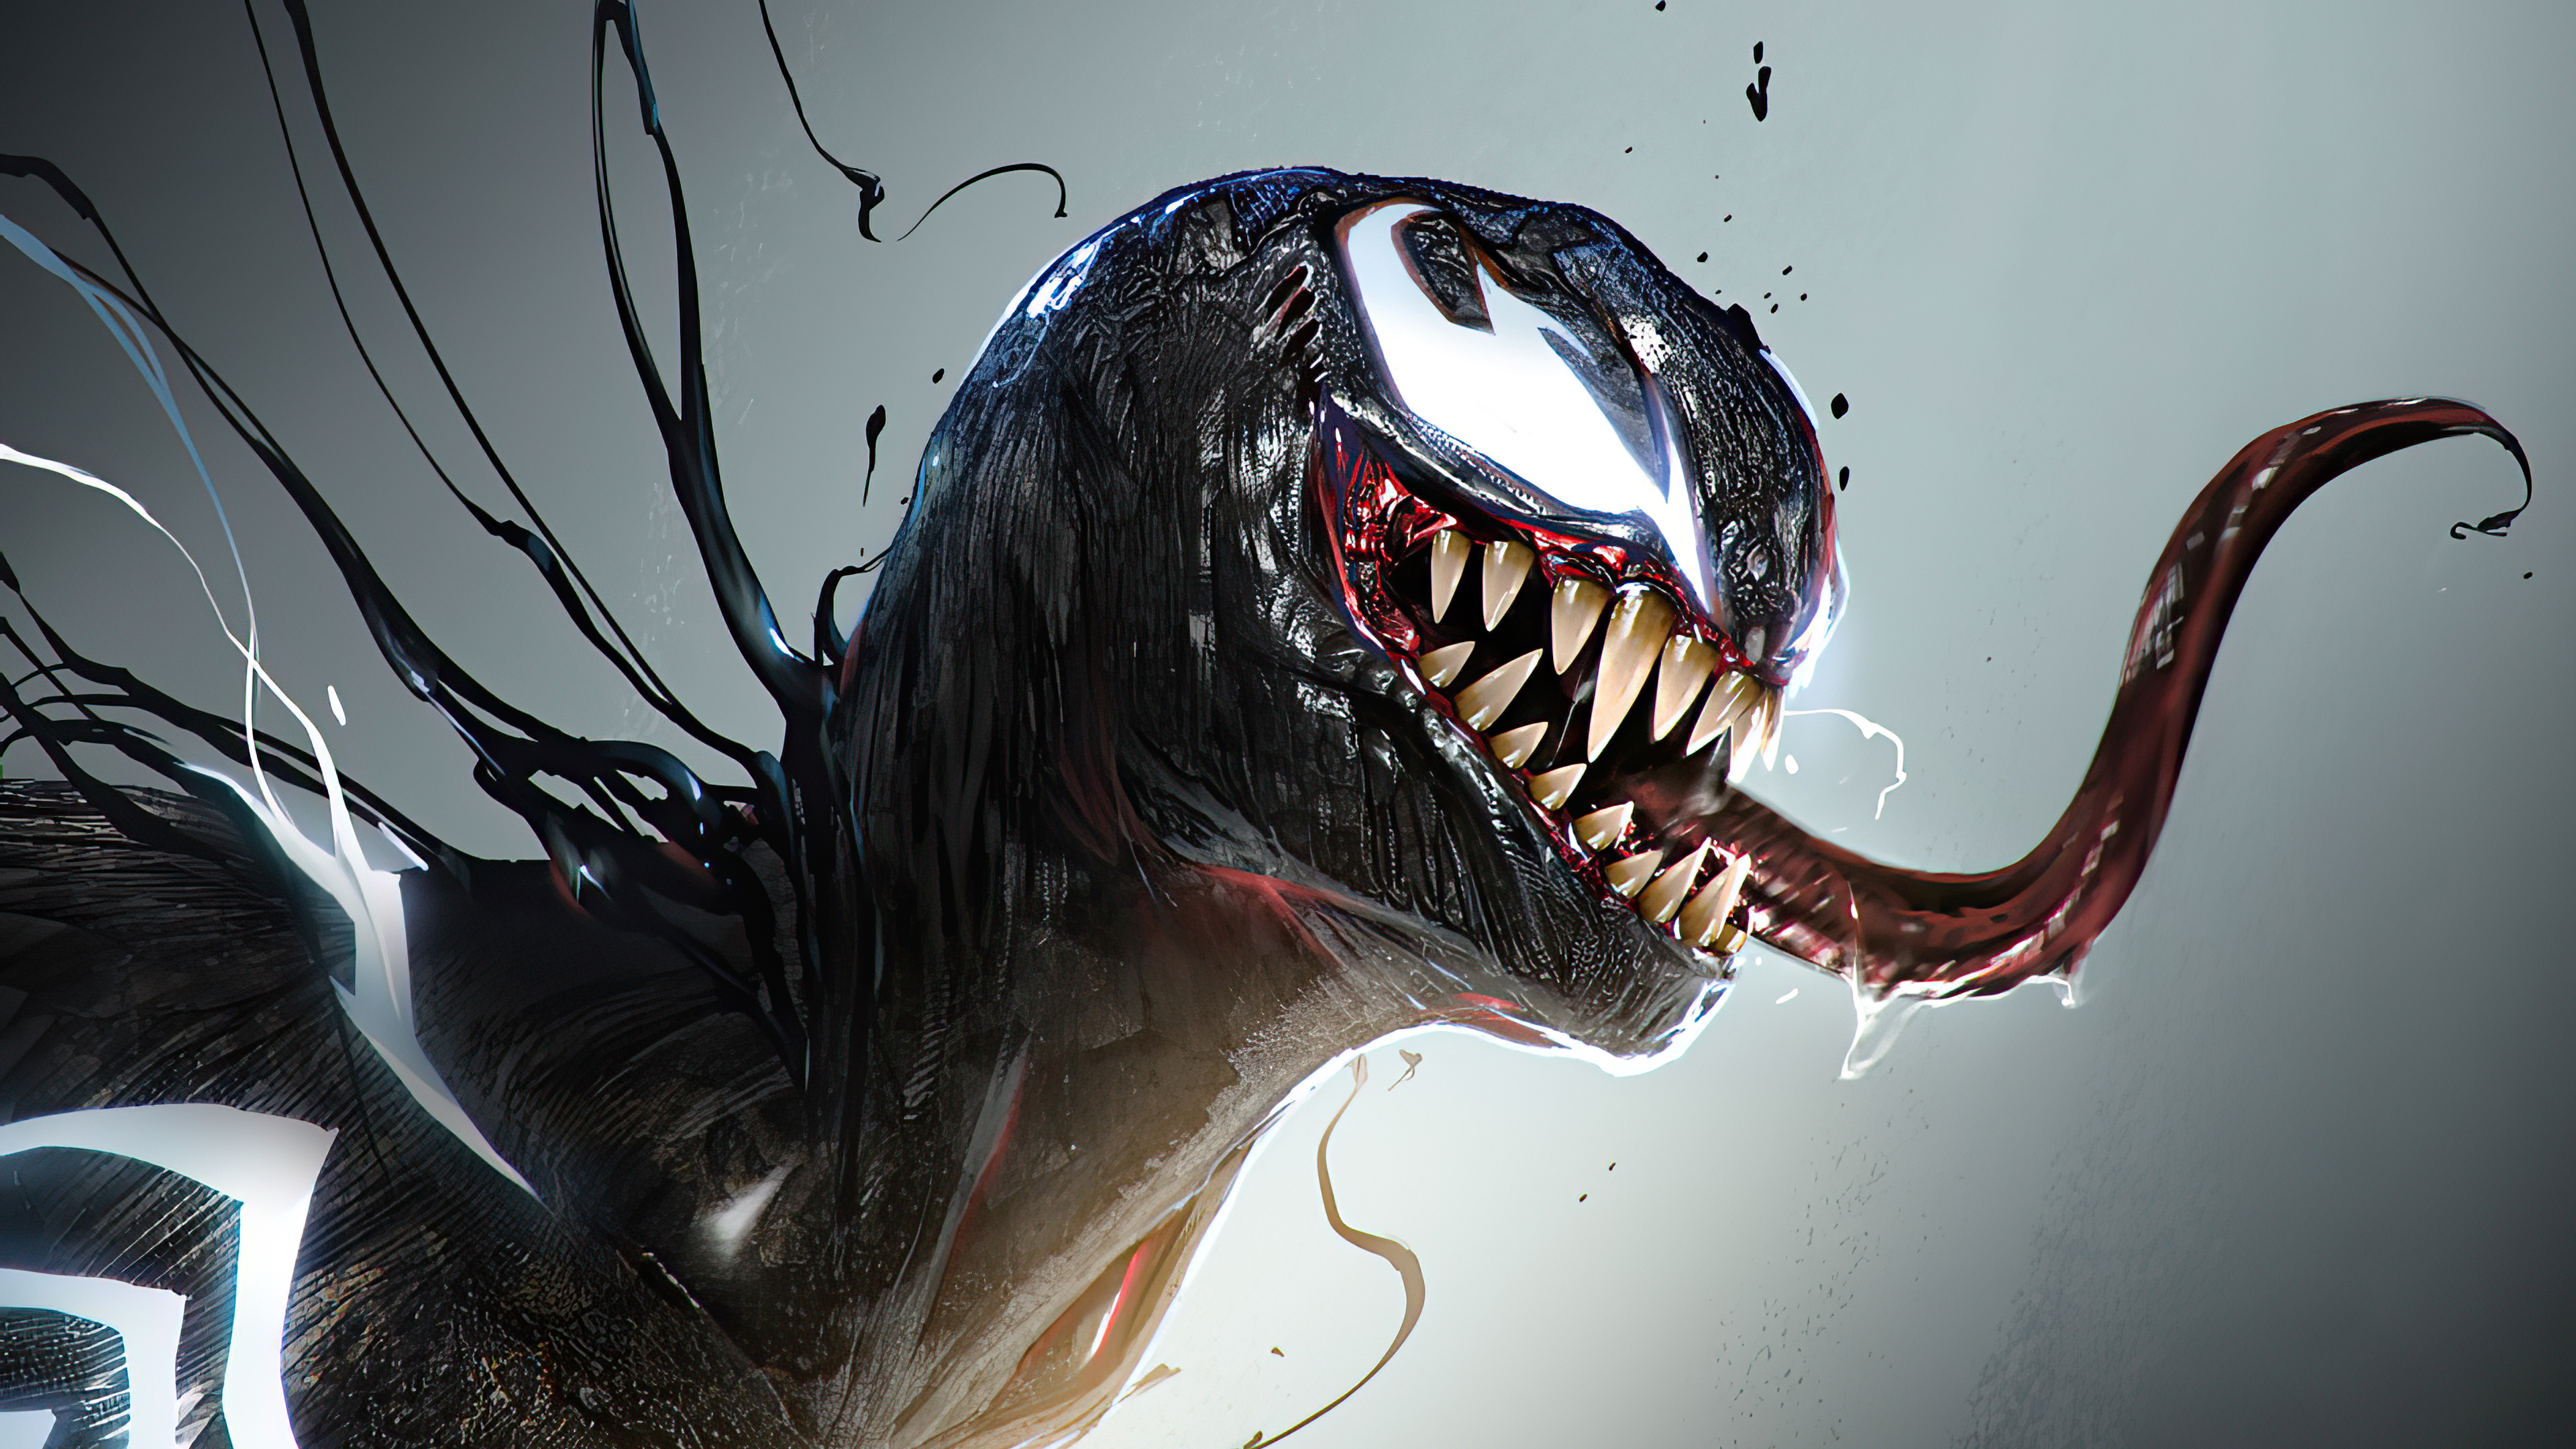 4K Venom Wallpaper and Background Image